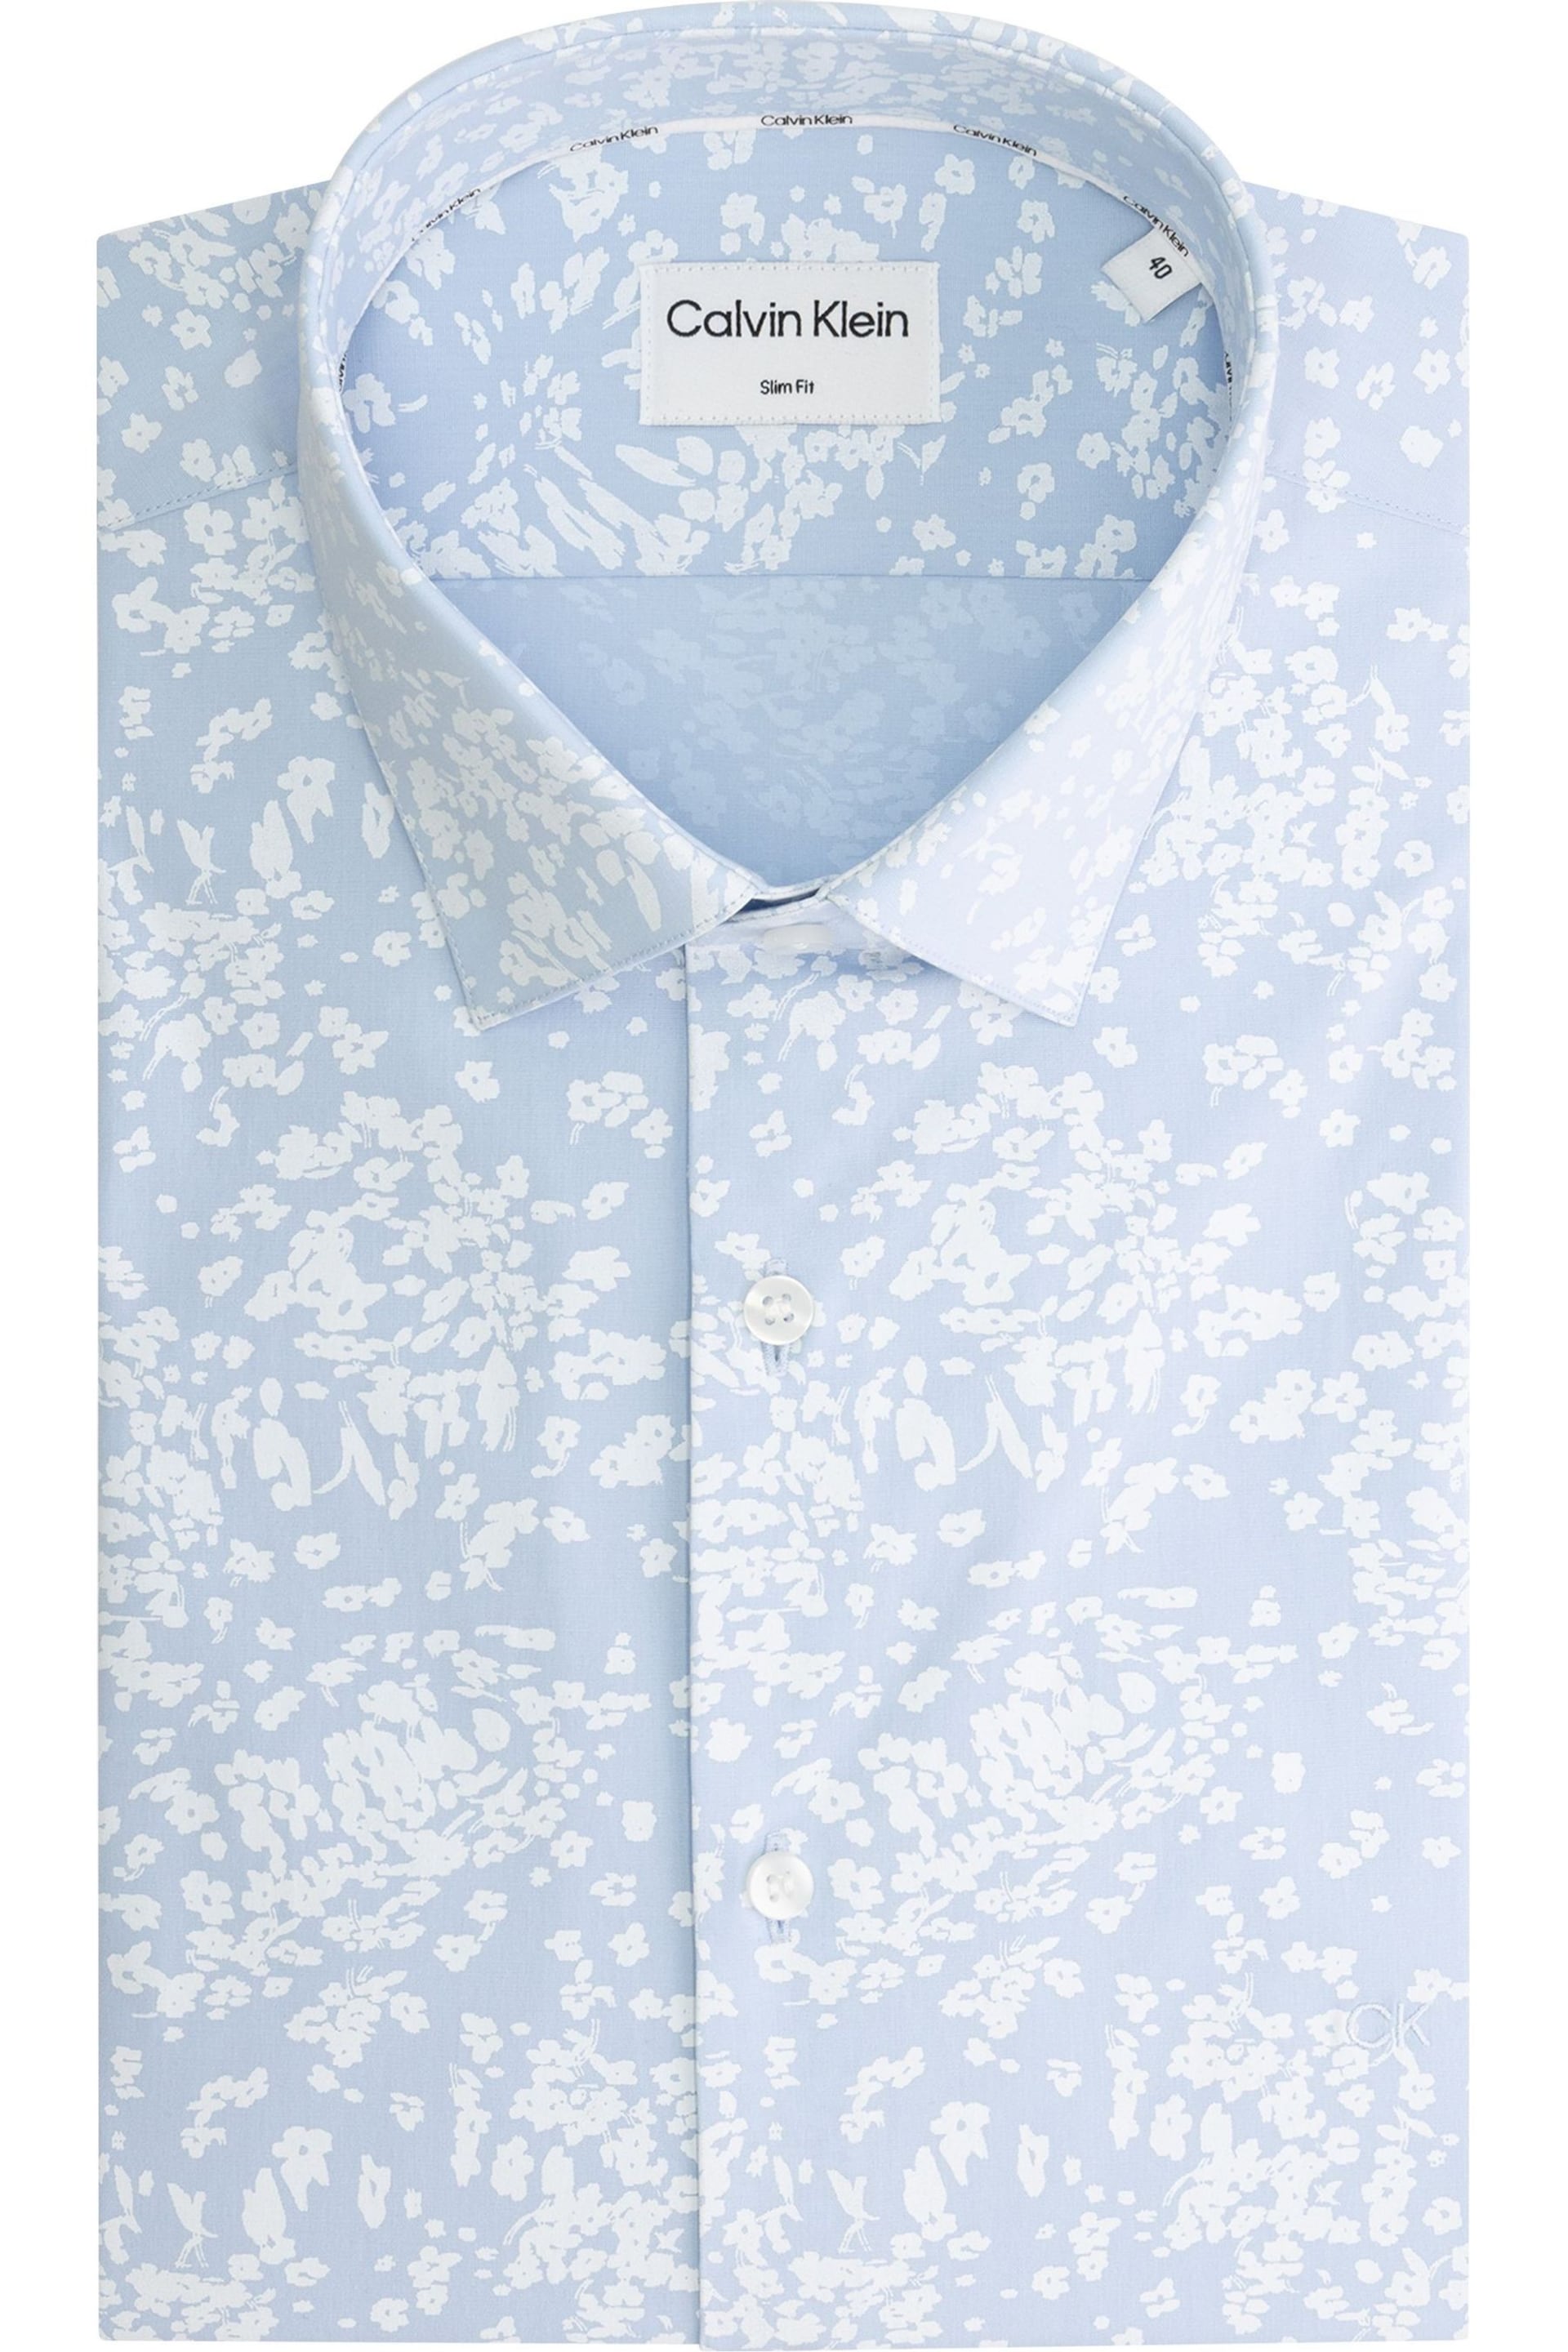 Calvin Klein Blue Slim Poplin Floral Print Shirt - Image 3 of 3